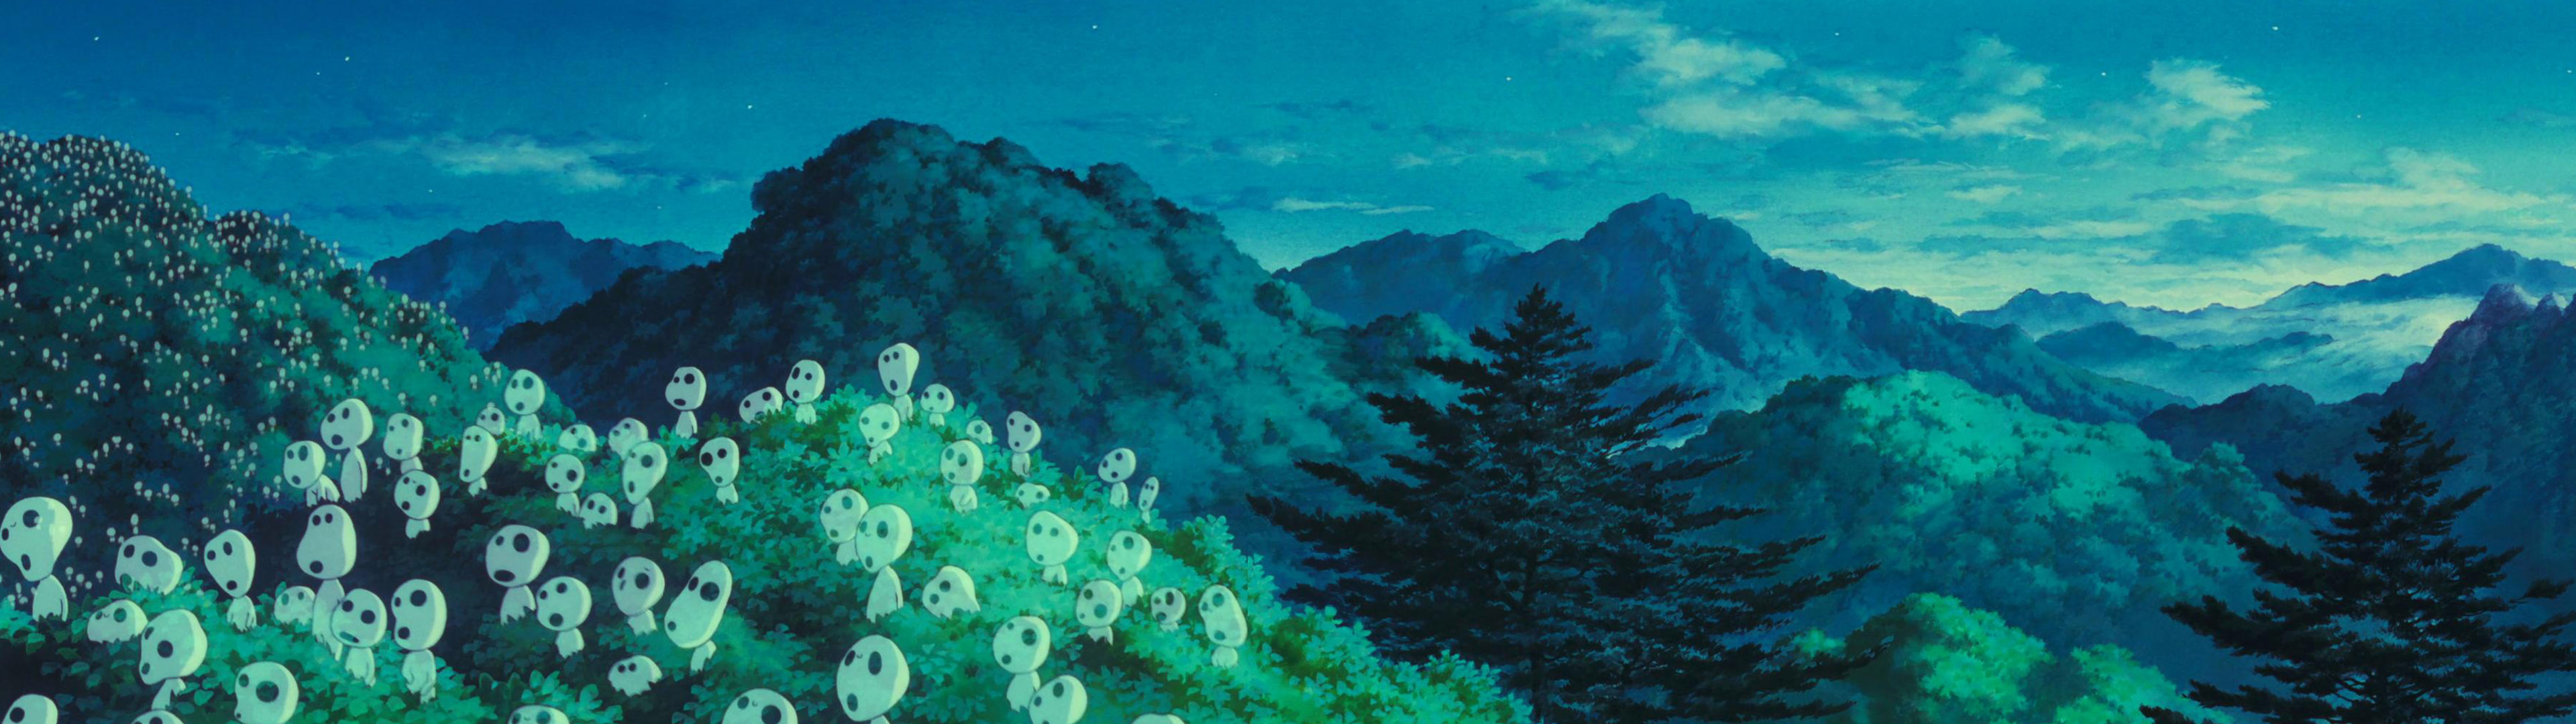 Ghibli Wallpaper Kodama Princess Mononoke Background